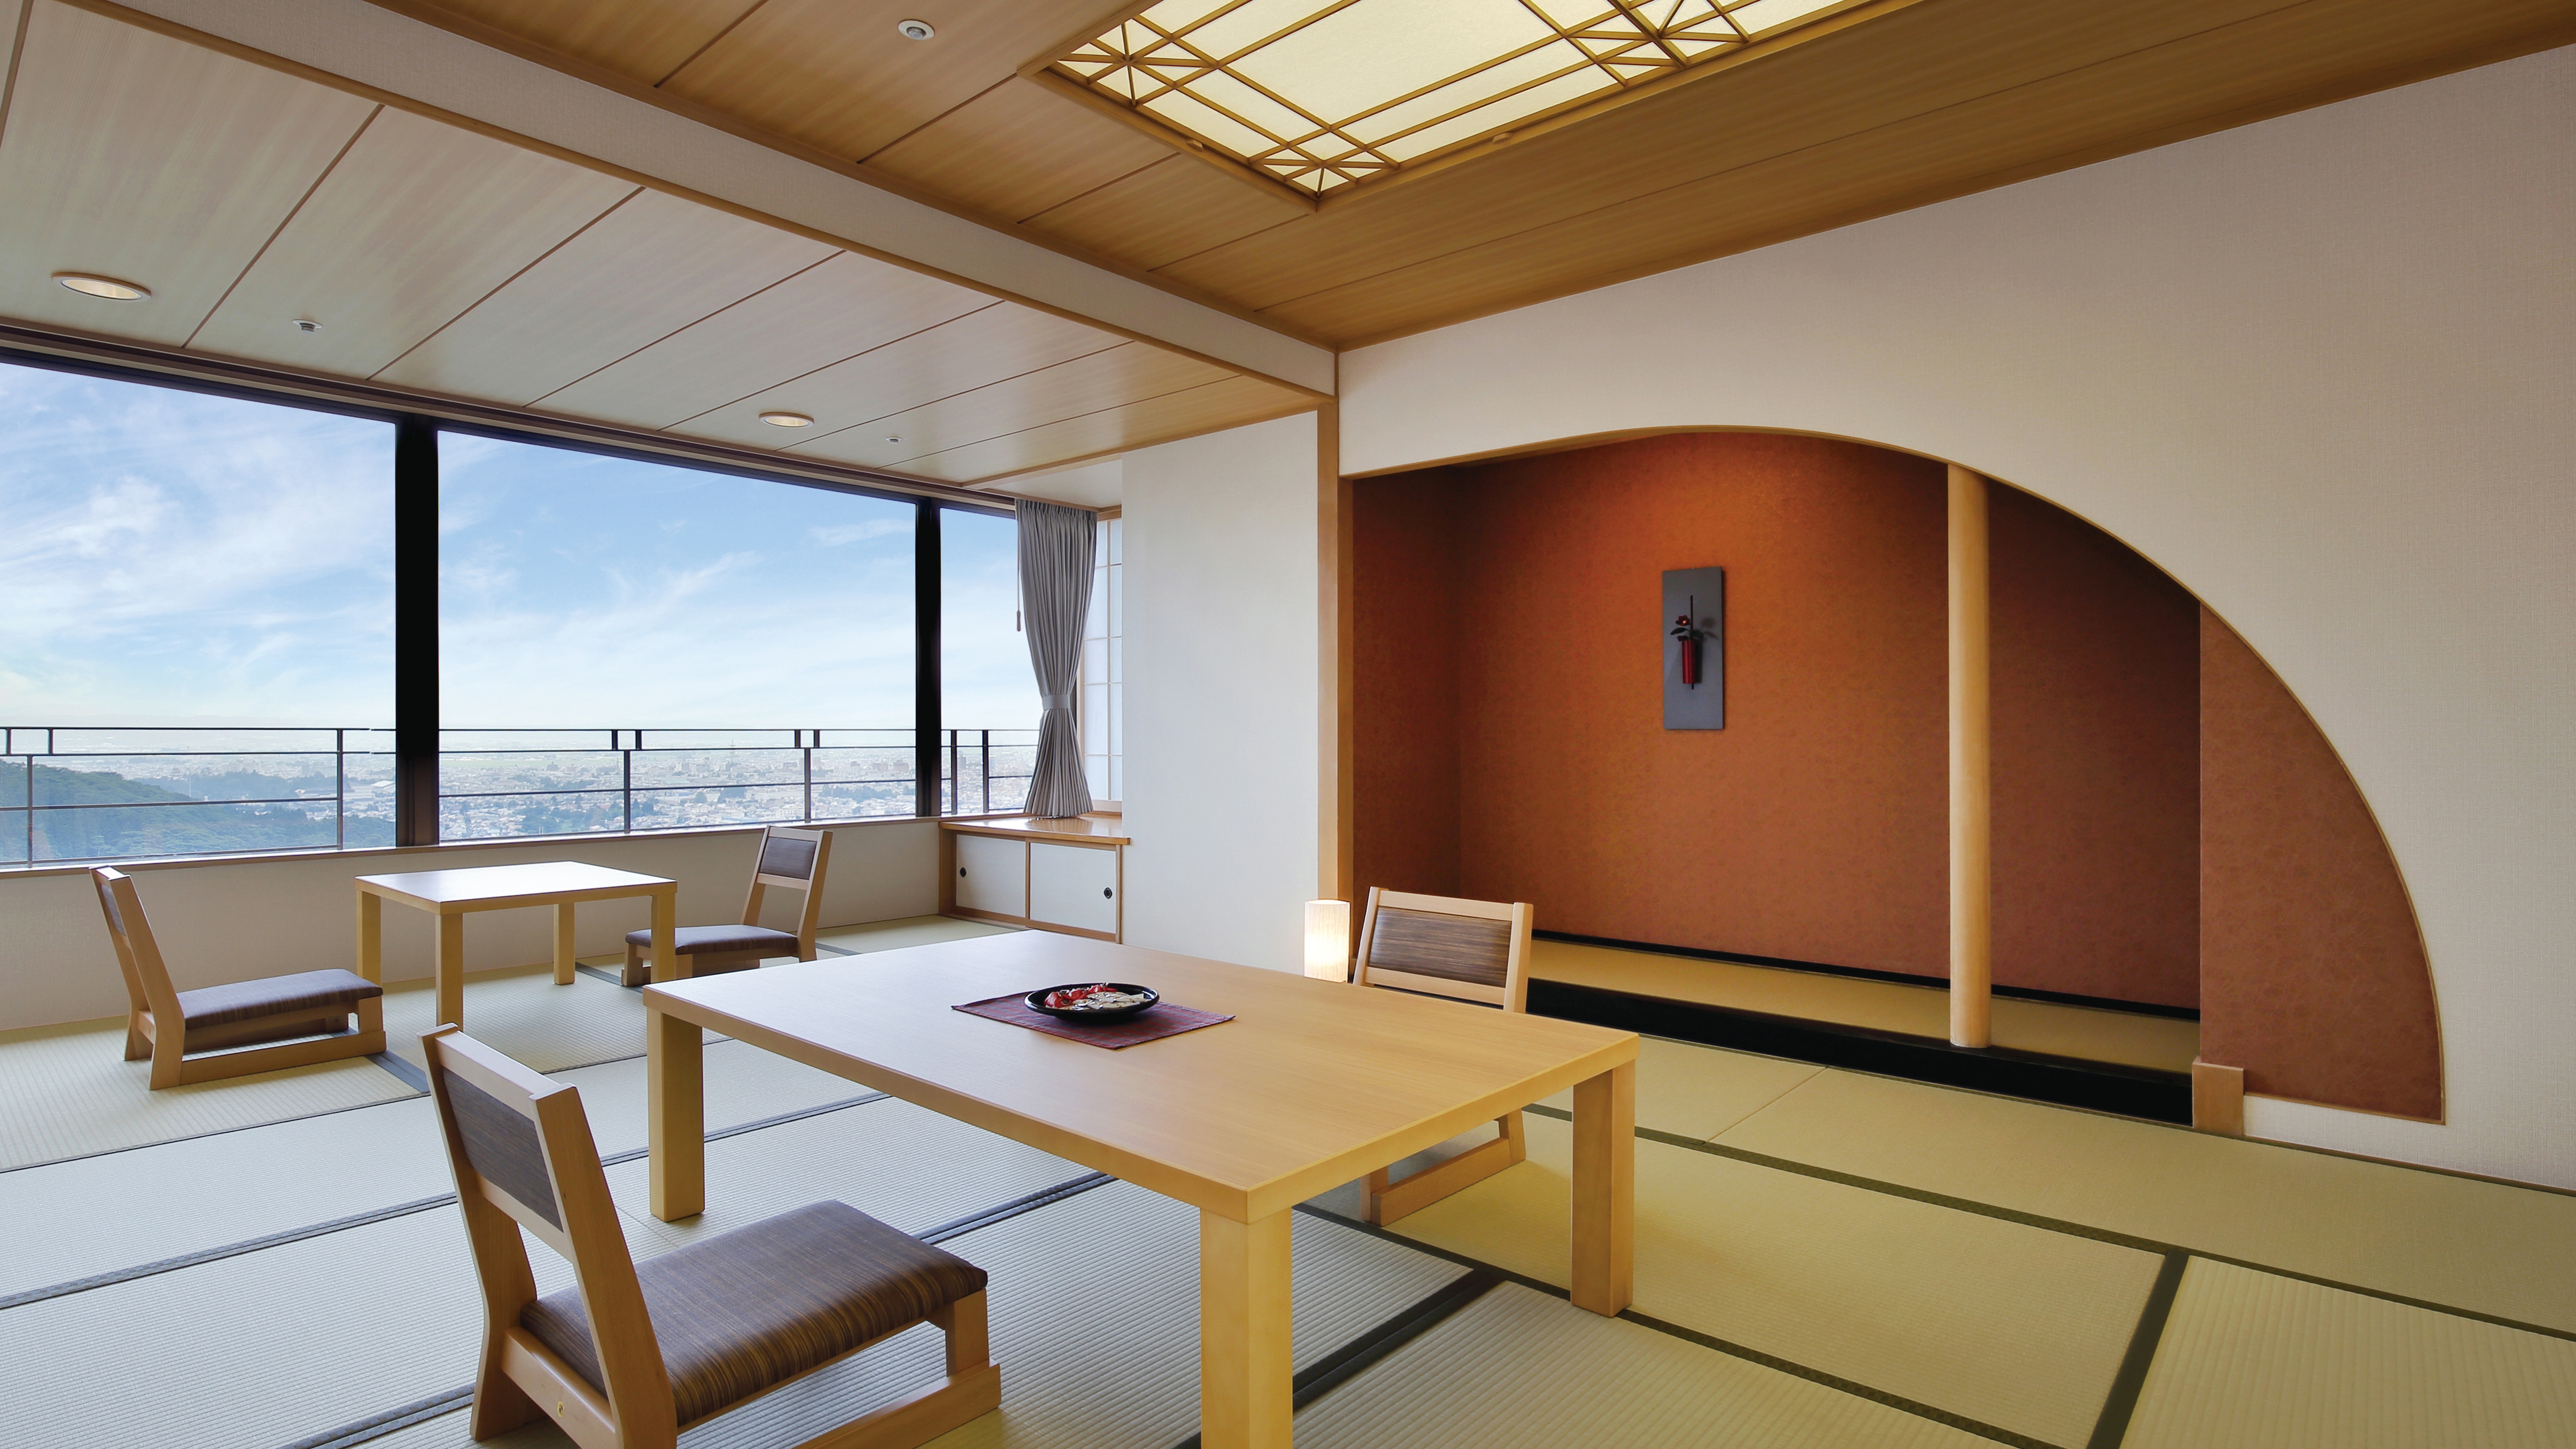 Kamar bergaya Jepang di gedung menara (lantai 7 hingga 17)